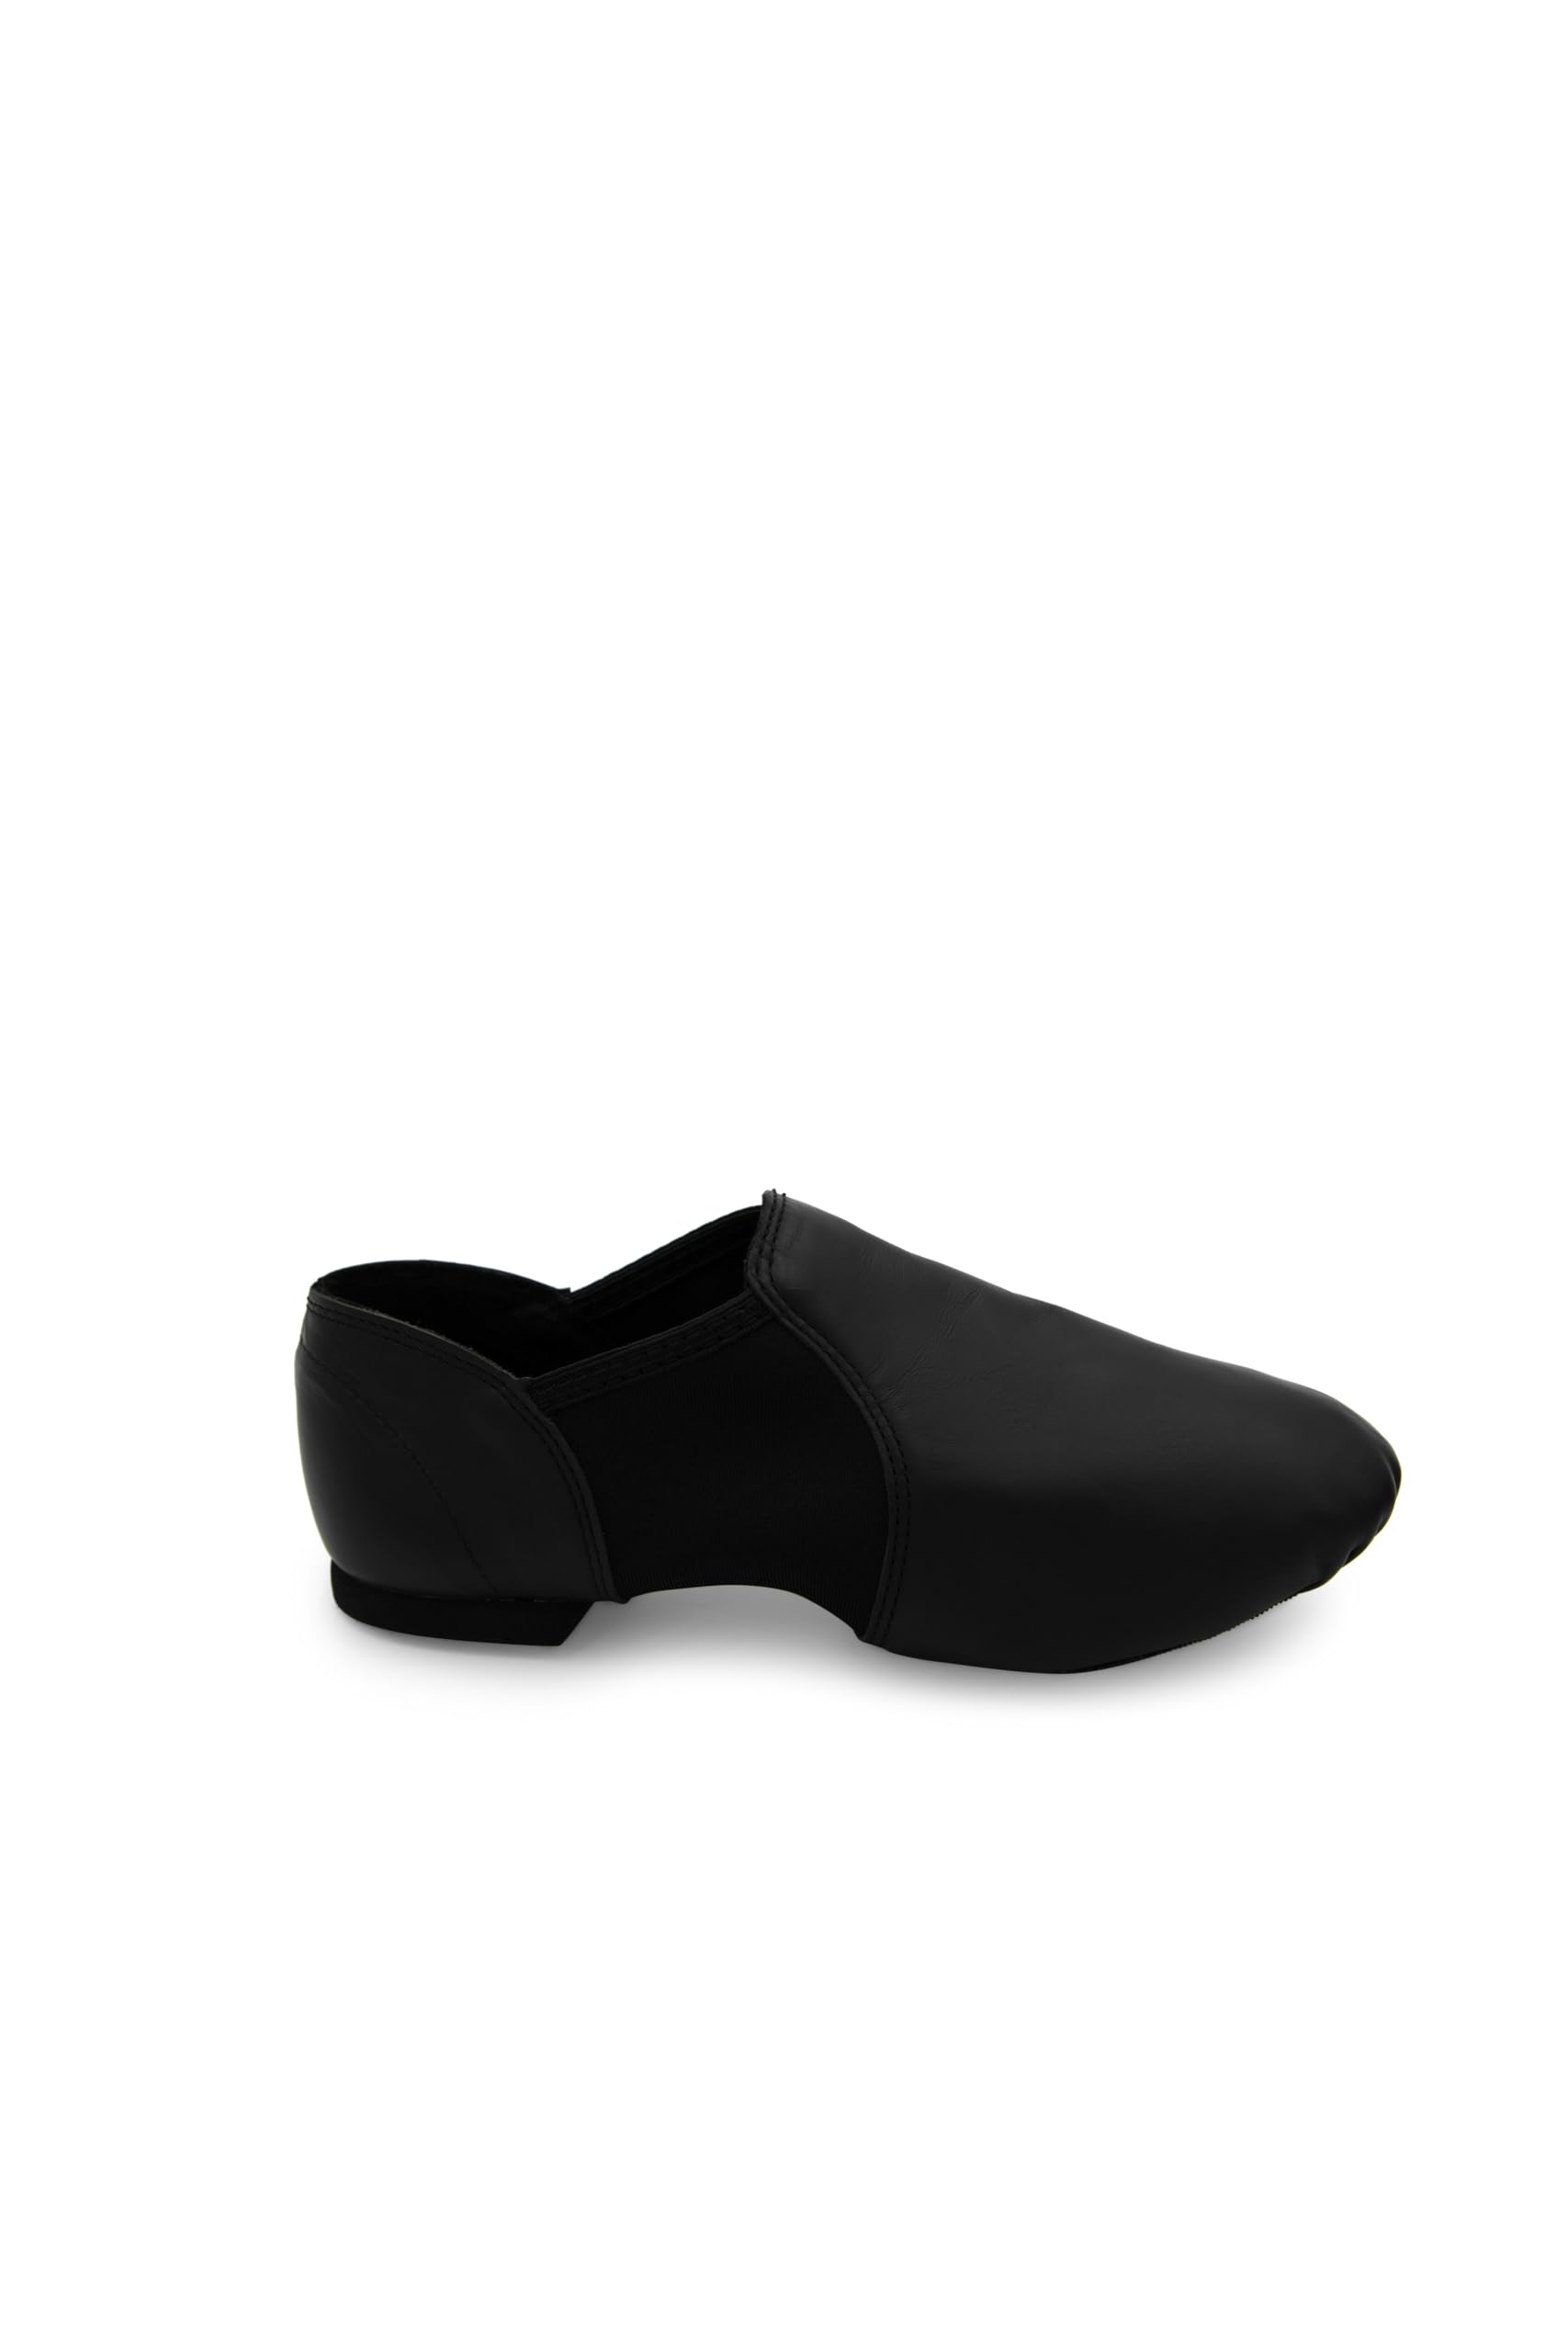 Capezio Girl's Future Star Jazz Shoe Ballet Flat